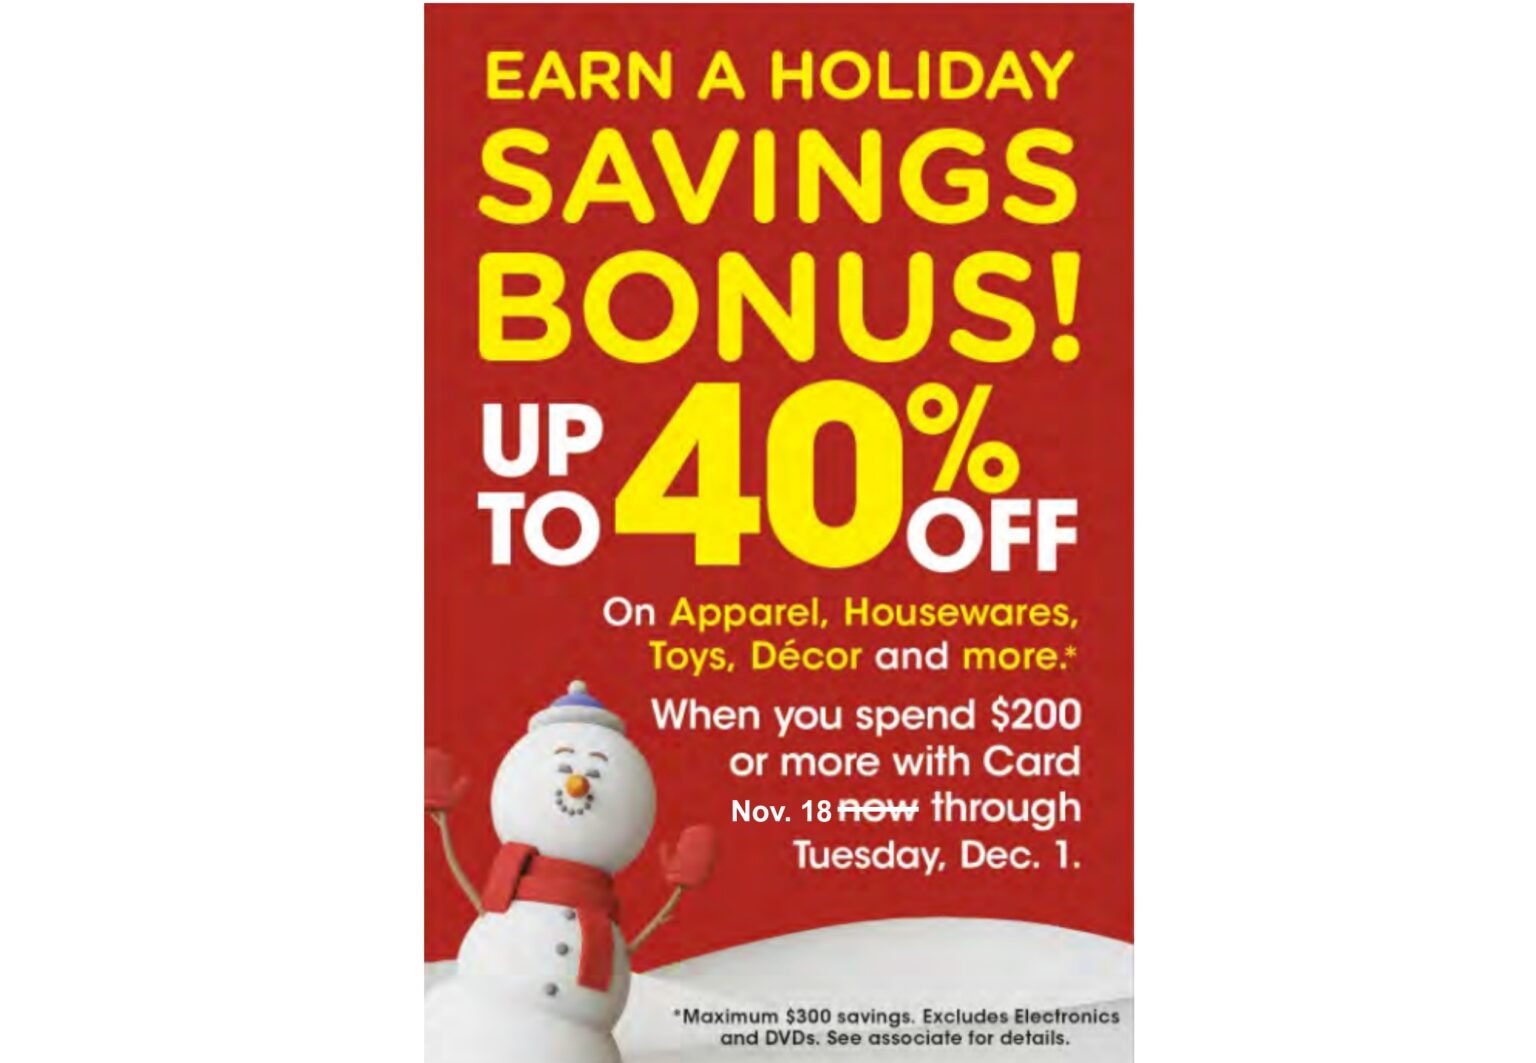 Kroger Holiday Savings Bonus is BACK!! Earn Up to 40 off Apparel, Home